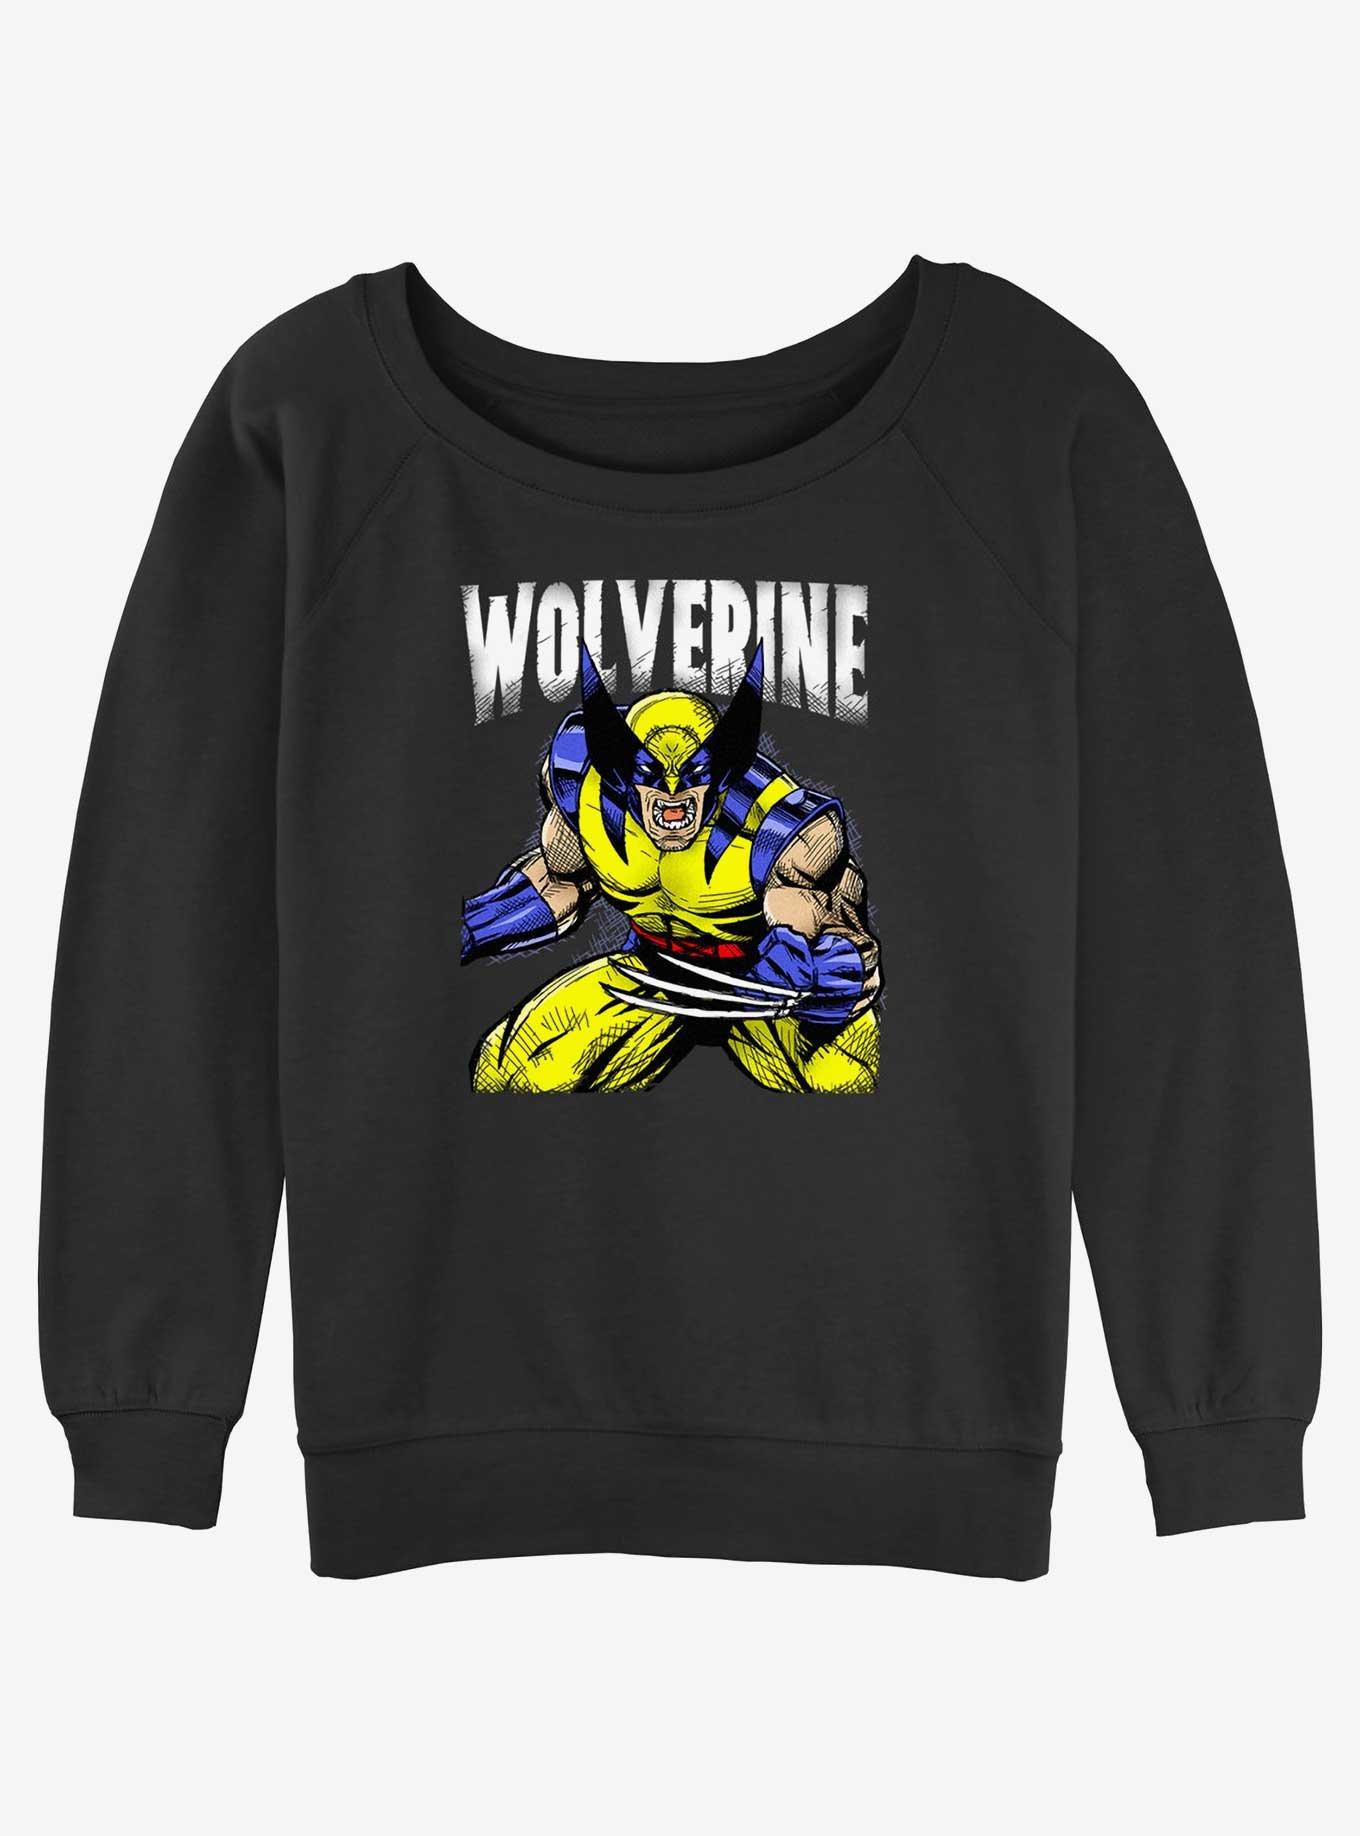 Wolverine Rage On Girls Slouchy Sweatshirt, BLACK, hi-res